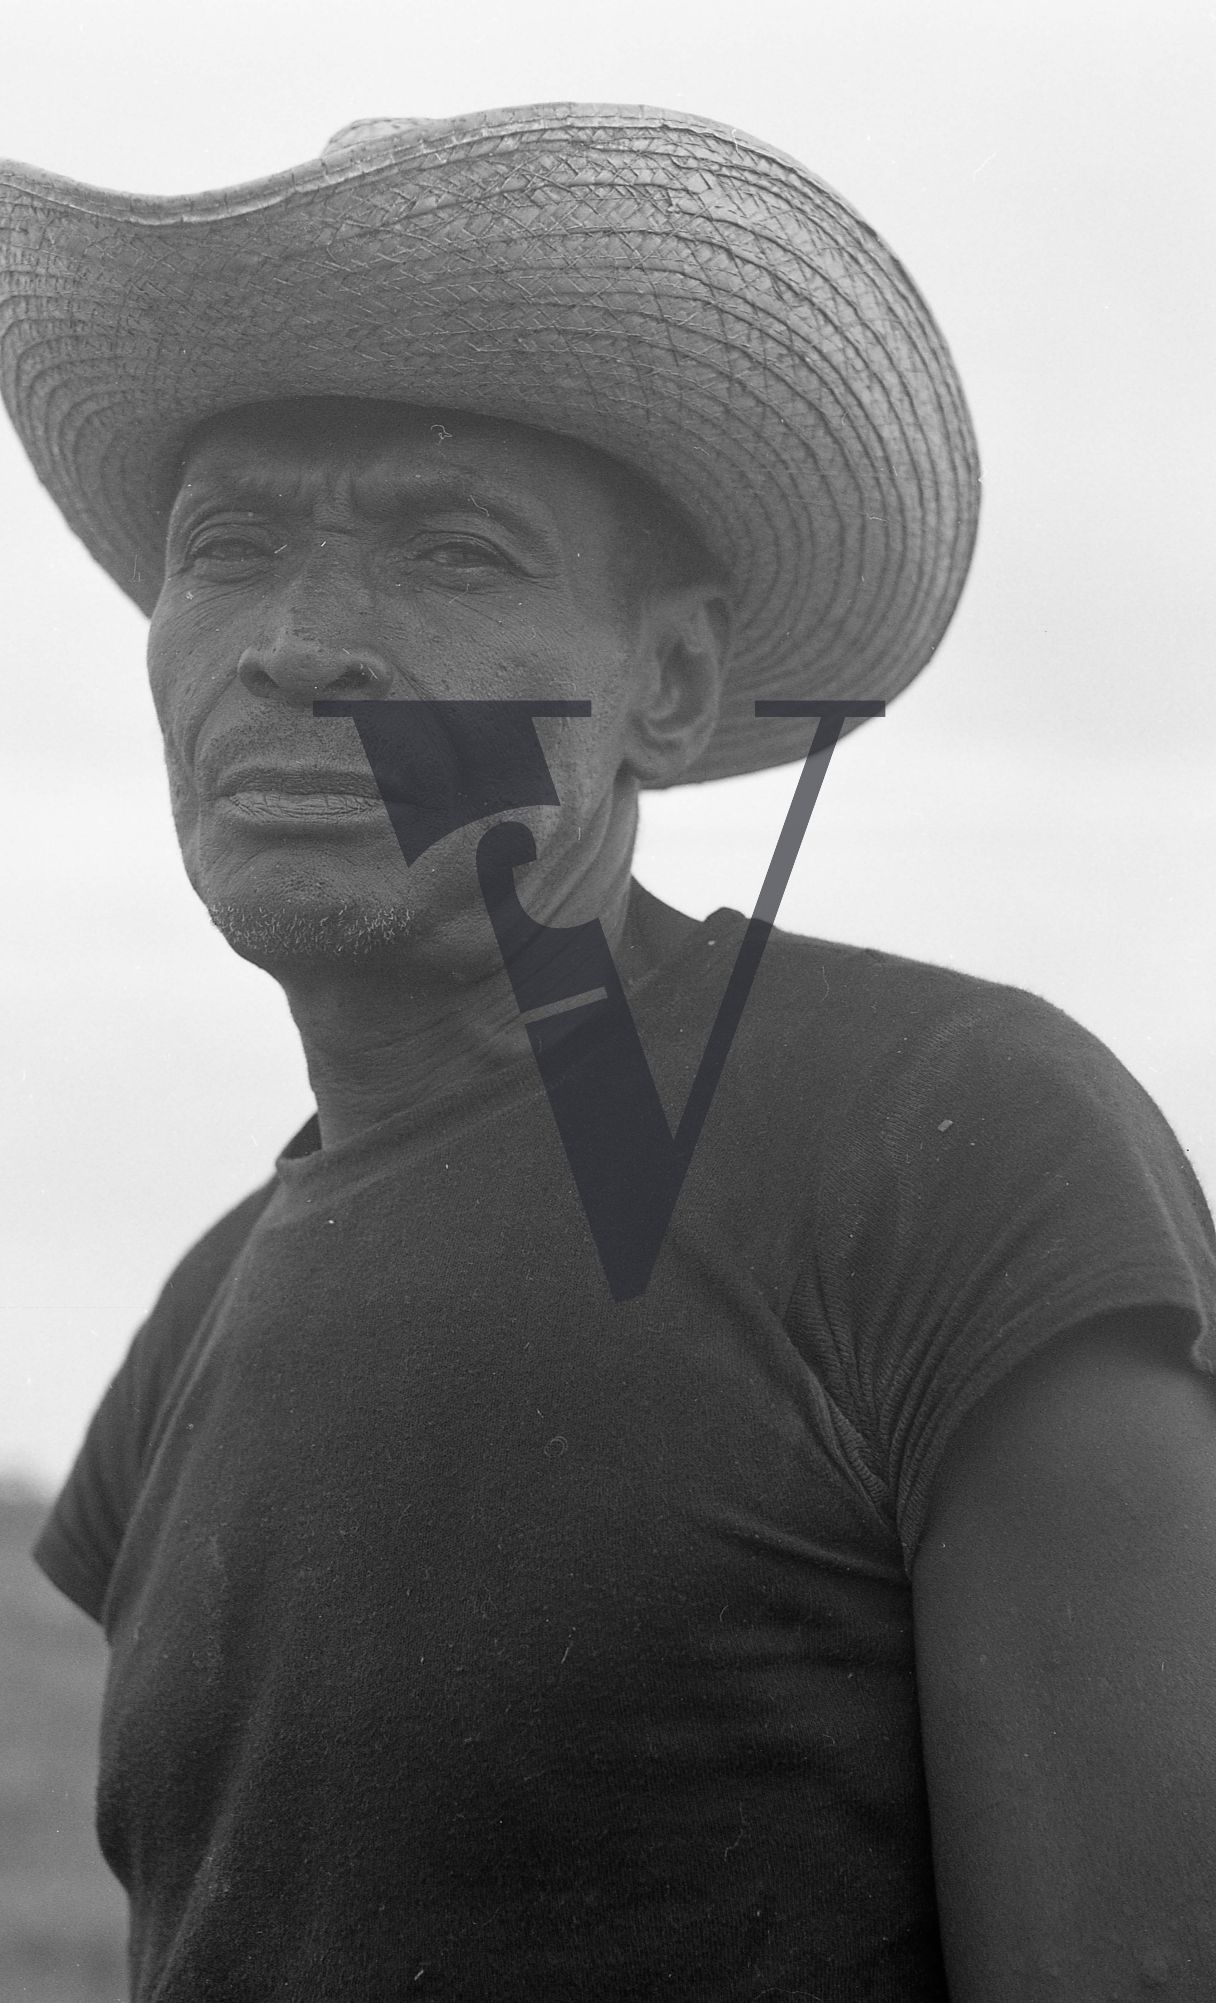 Belize, Portrait, man in large straw hat, t-shirt.